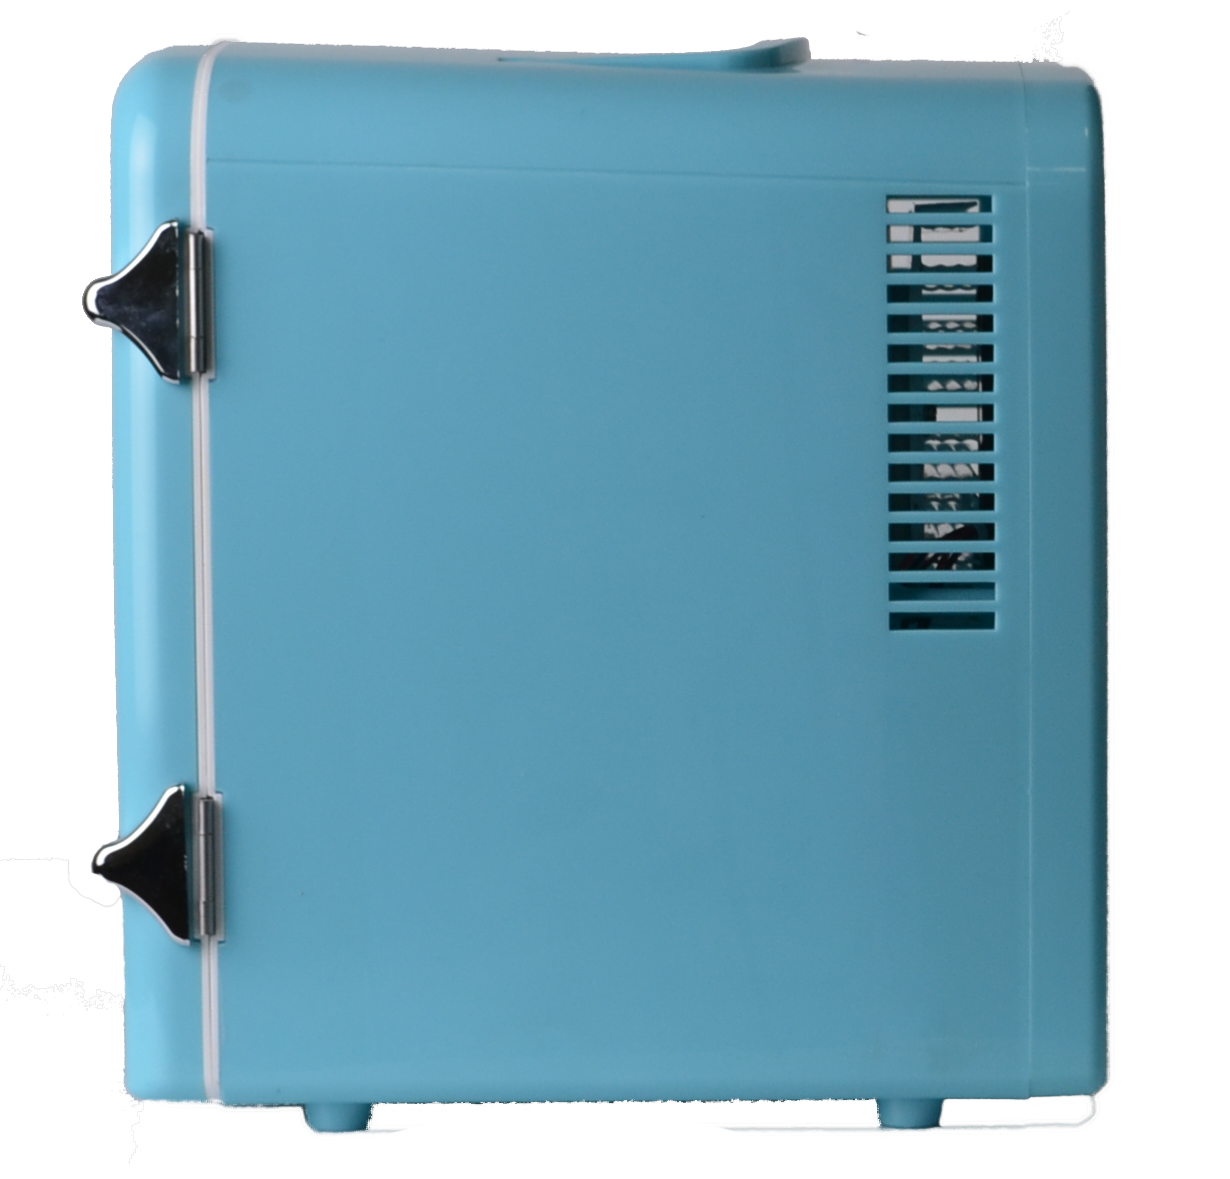 Frigidaire Portable Retro 6 Can Personal Beverage Cooler, EFMIS129, Blue - image 3 of 9